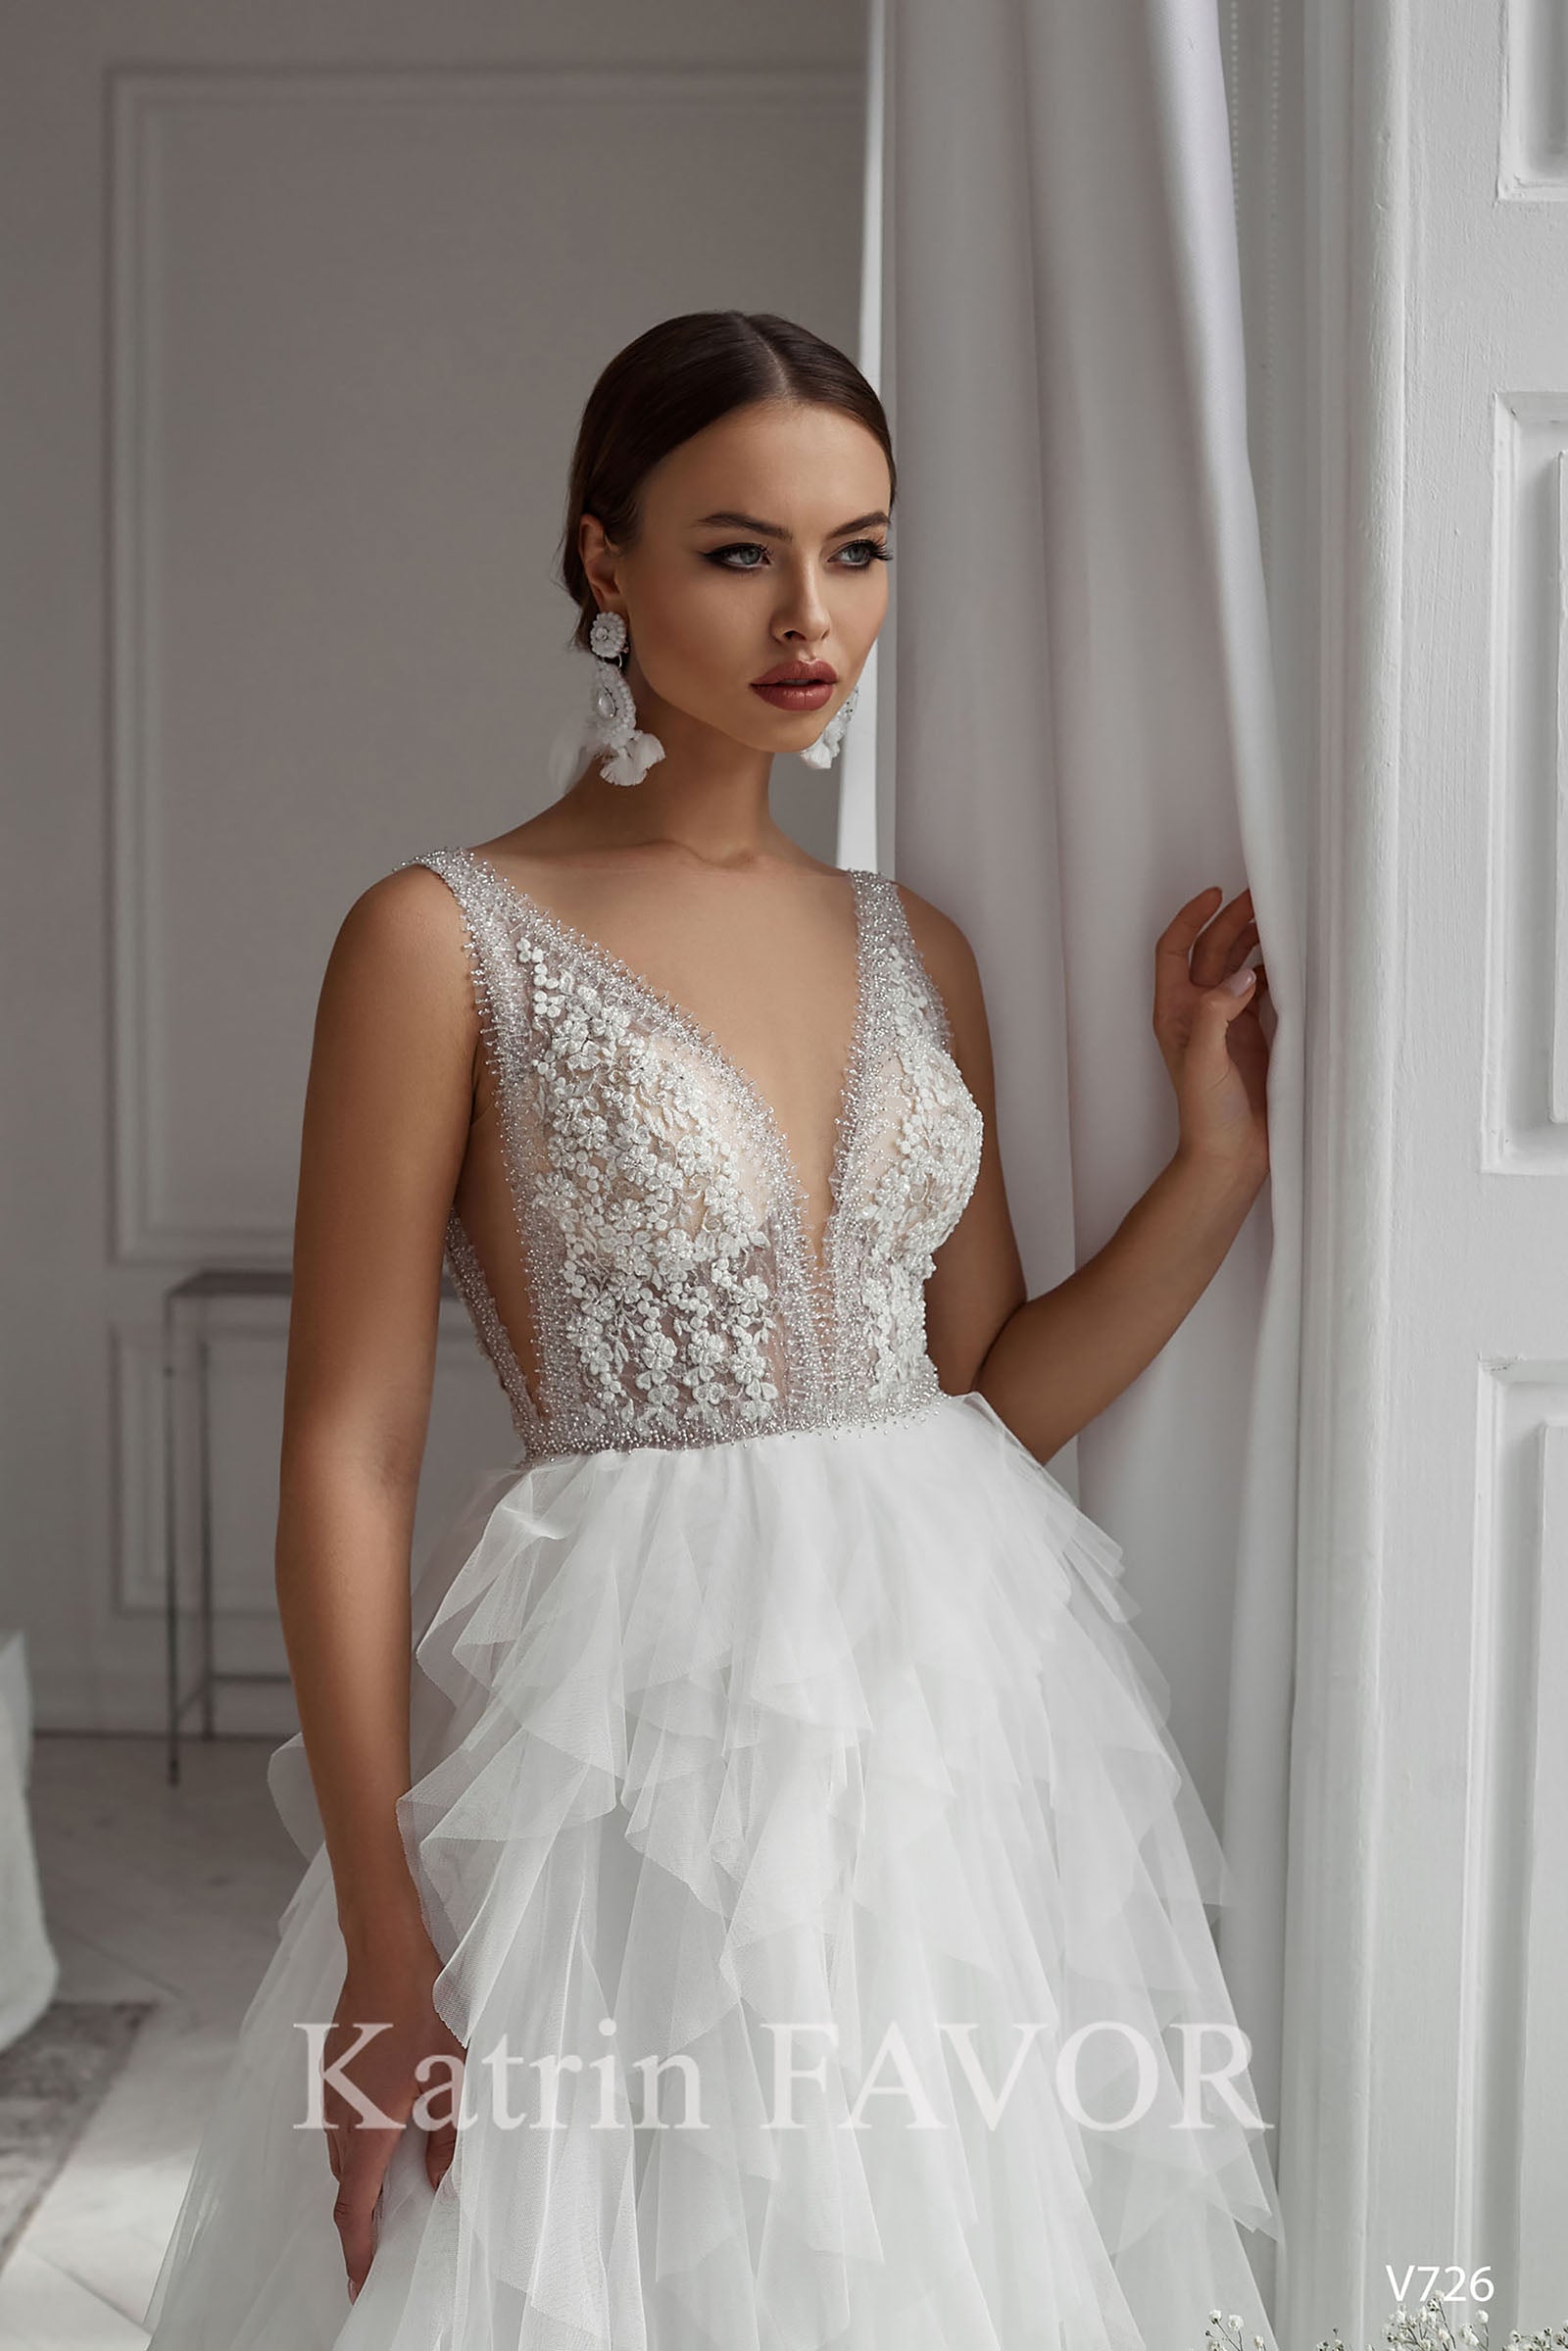 KatrinFAVORboutique-Tiered skirt 2 in 1 wedding dress